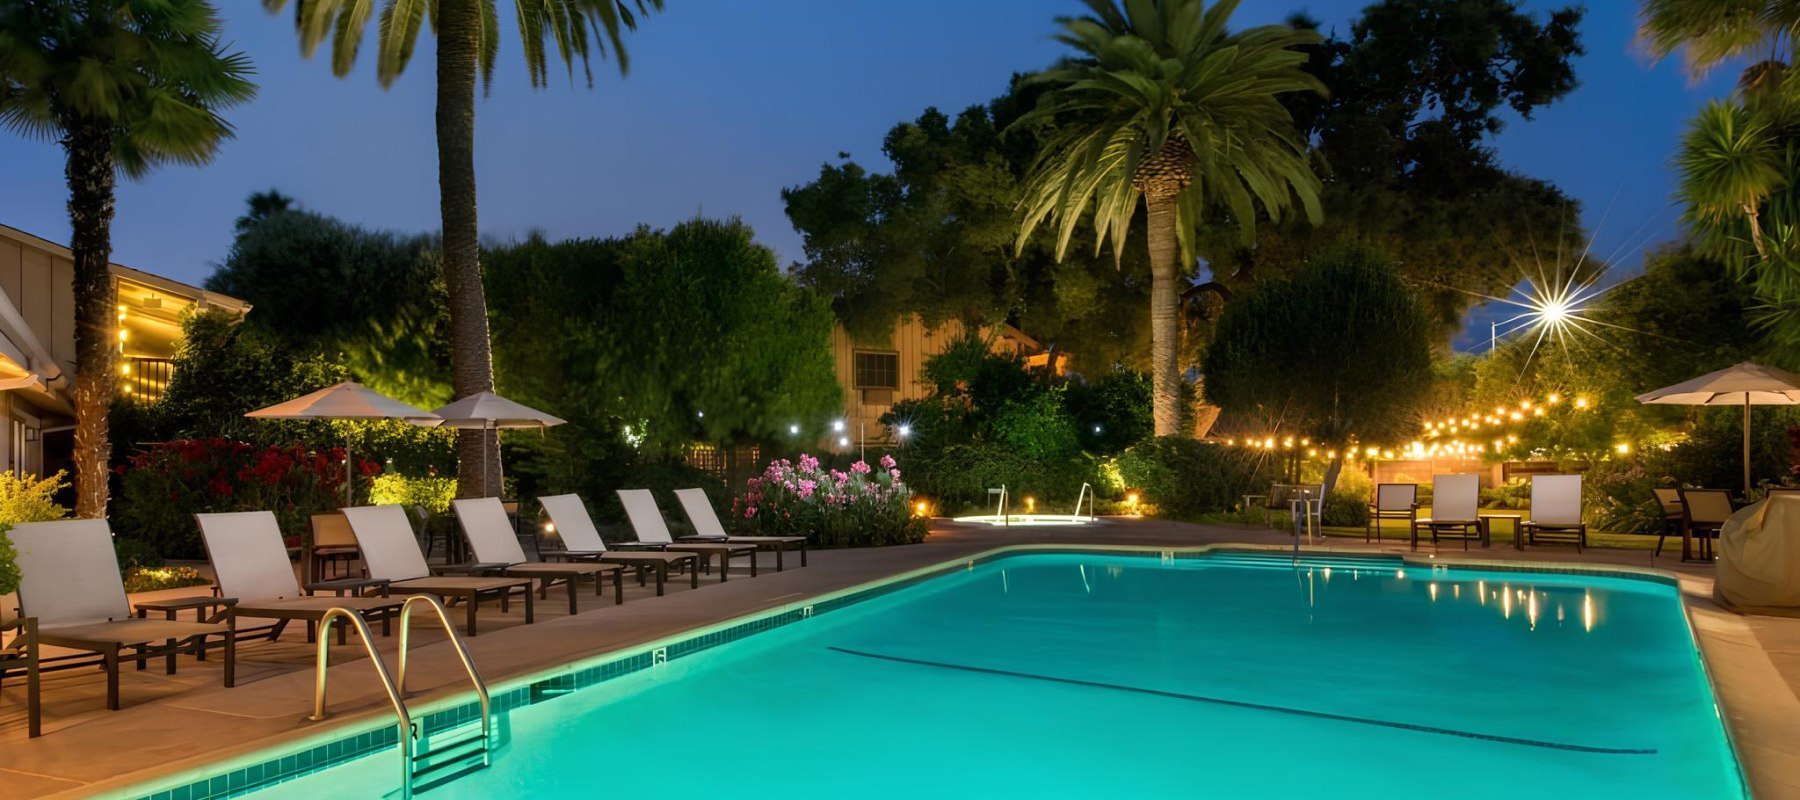 Luxurious Swimming Pool at El Pueblo Inn, California